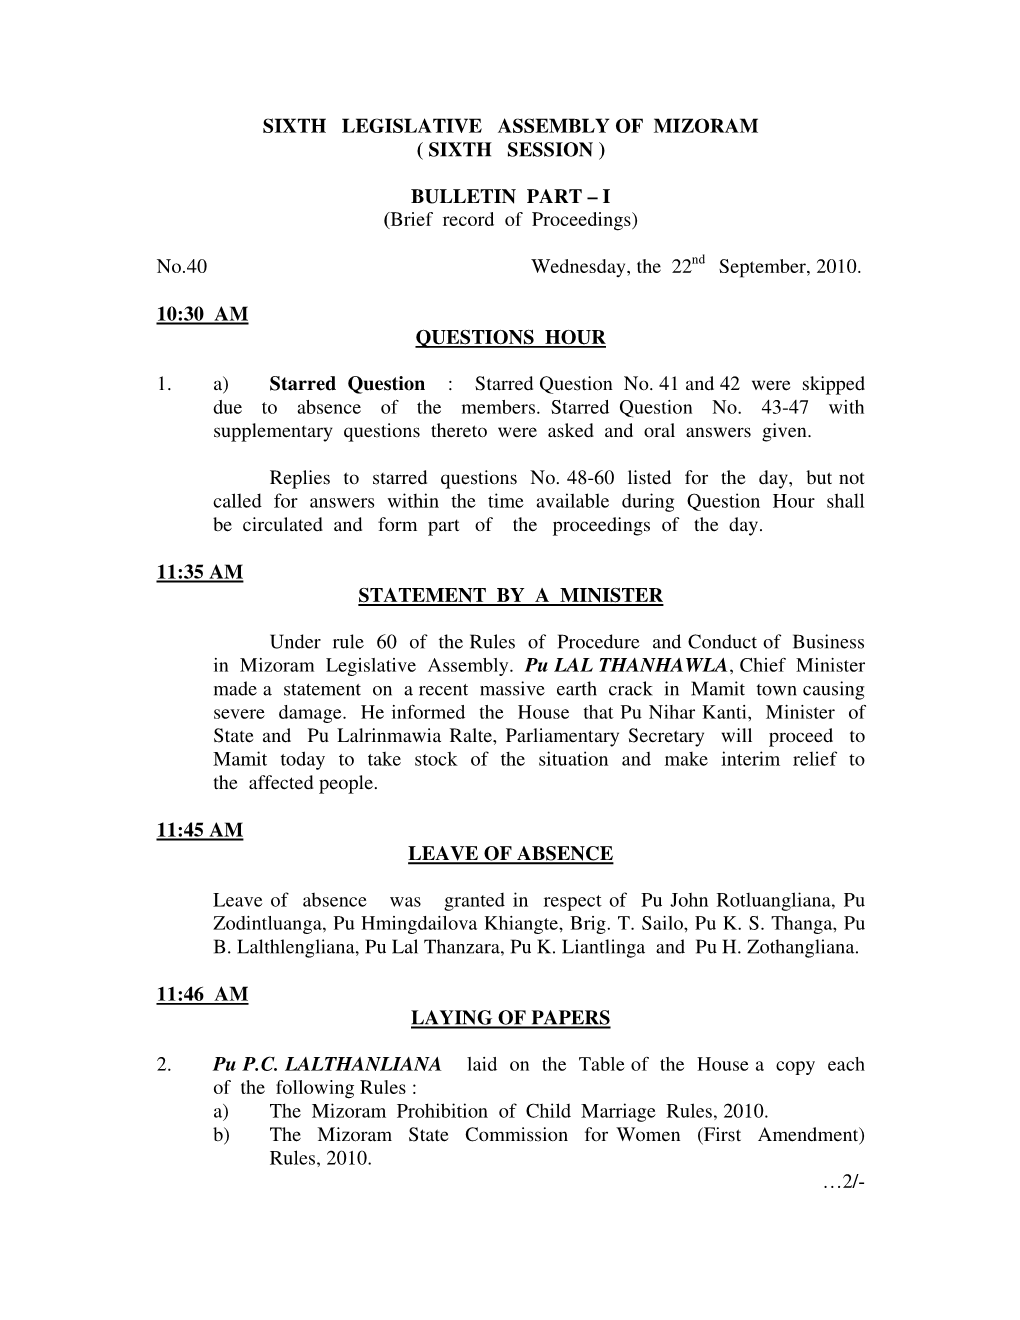 Sixth Legislative Assembly of Mizoram ( Sixth Session )